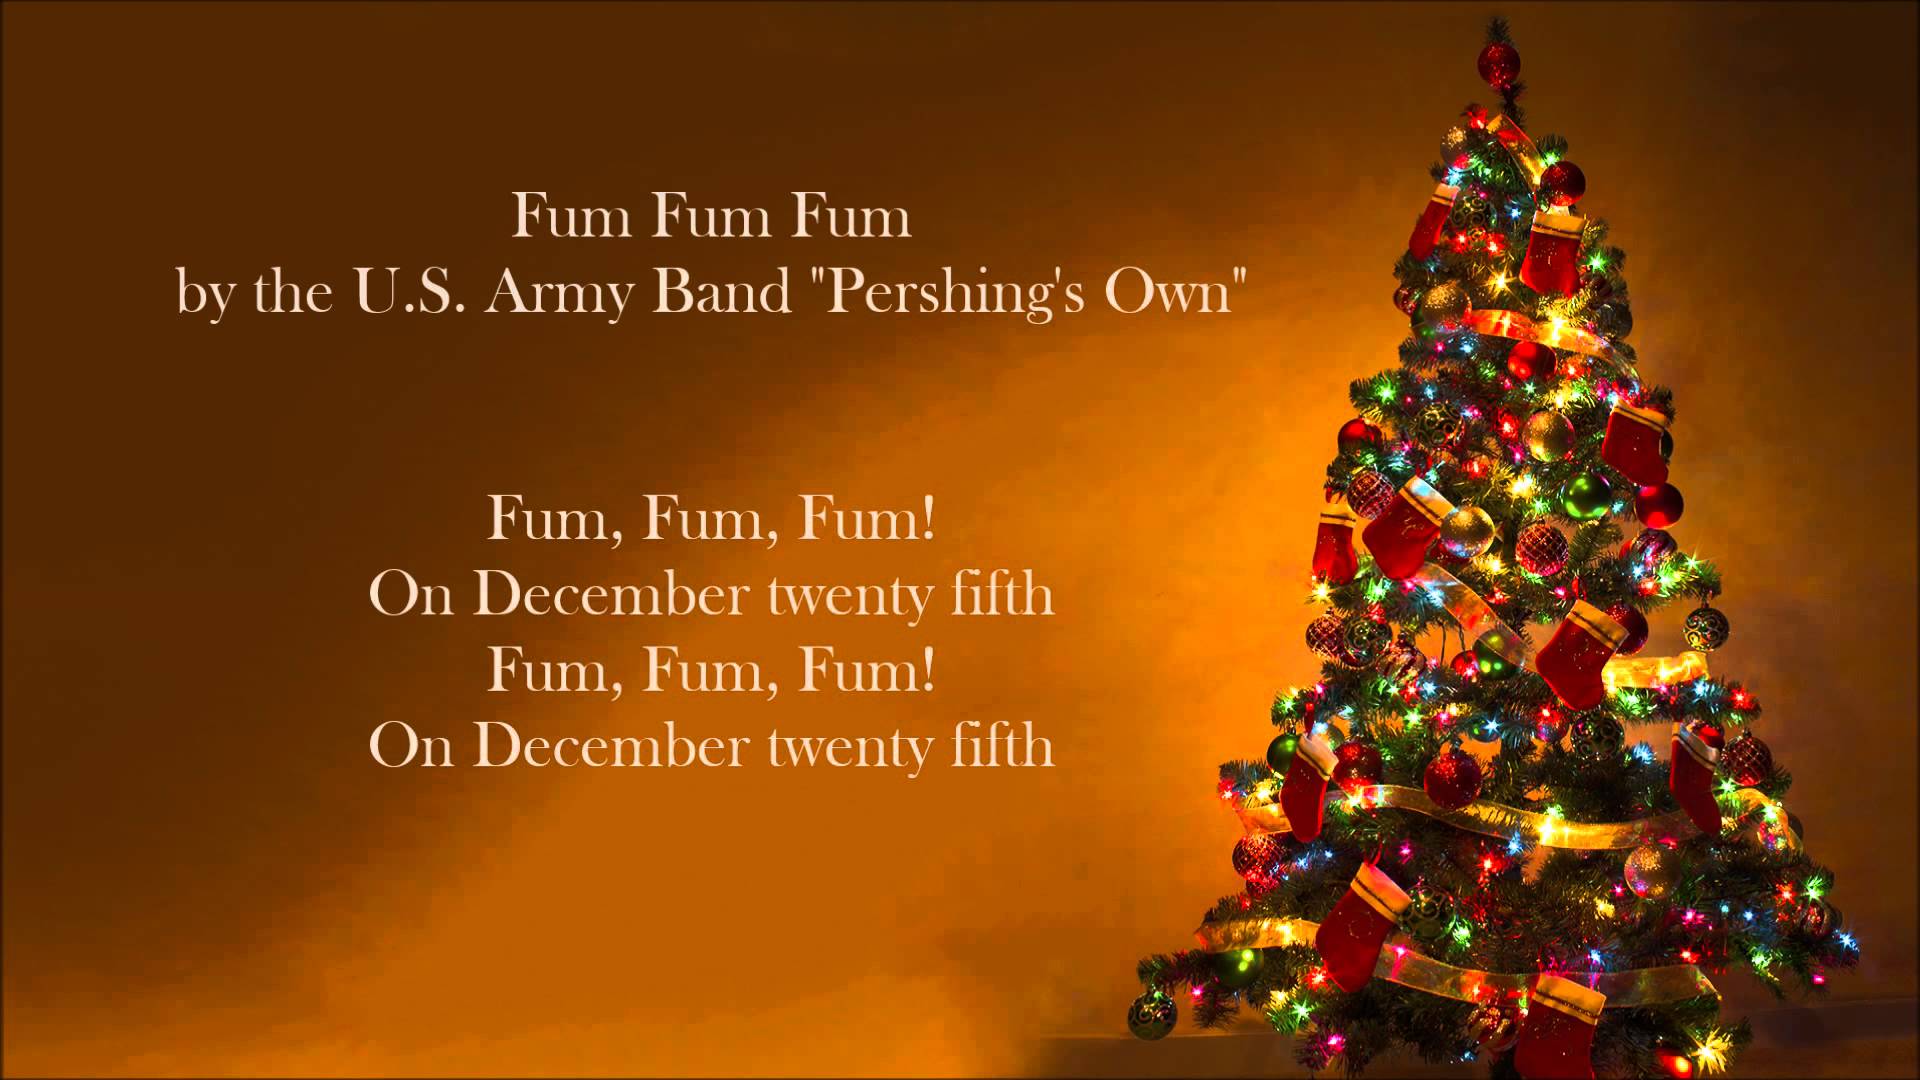 Song lyrics to a Spanish Christmas carol, Fum, Fum, Fum